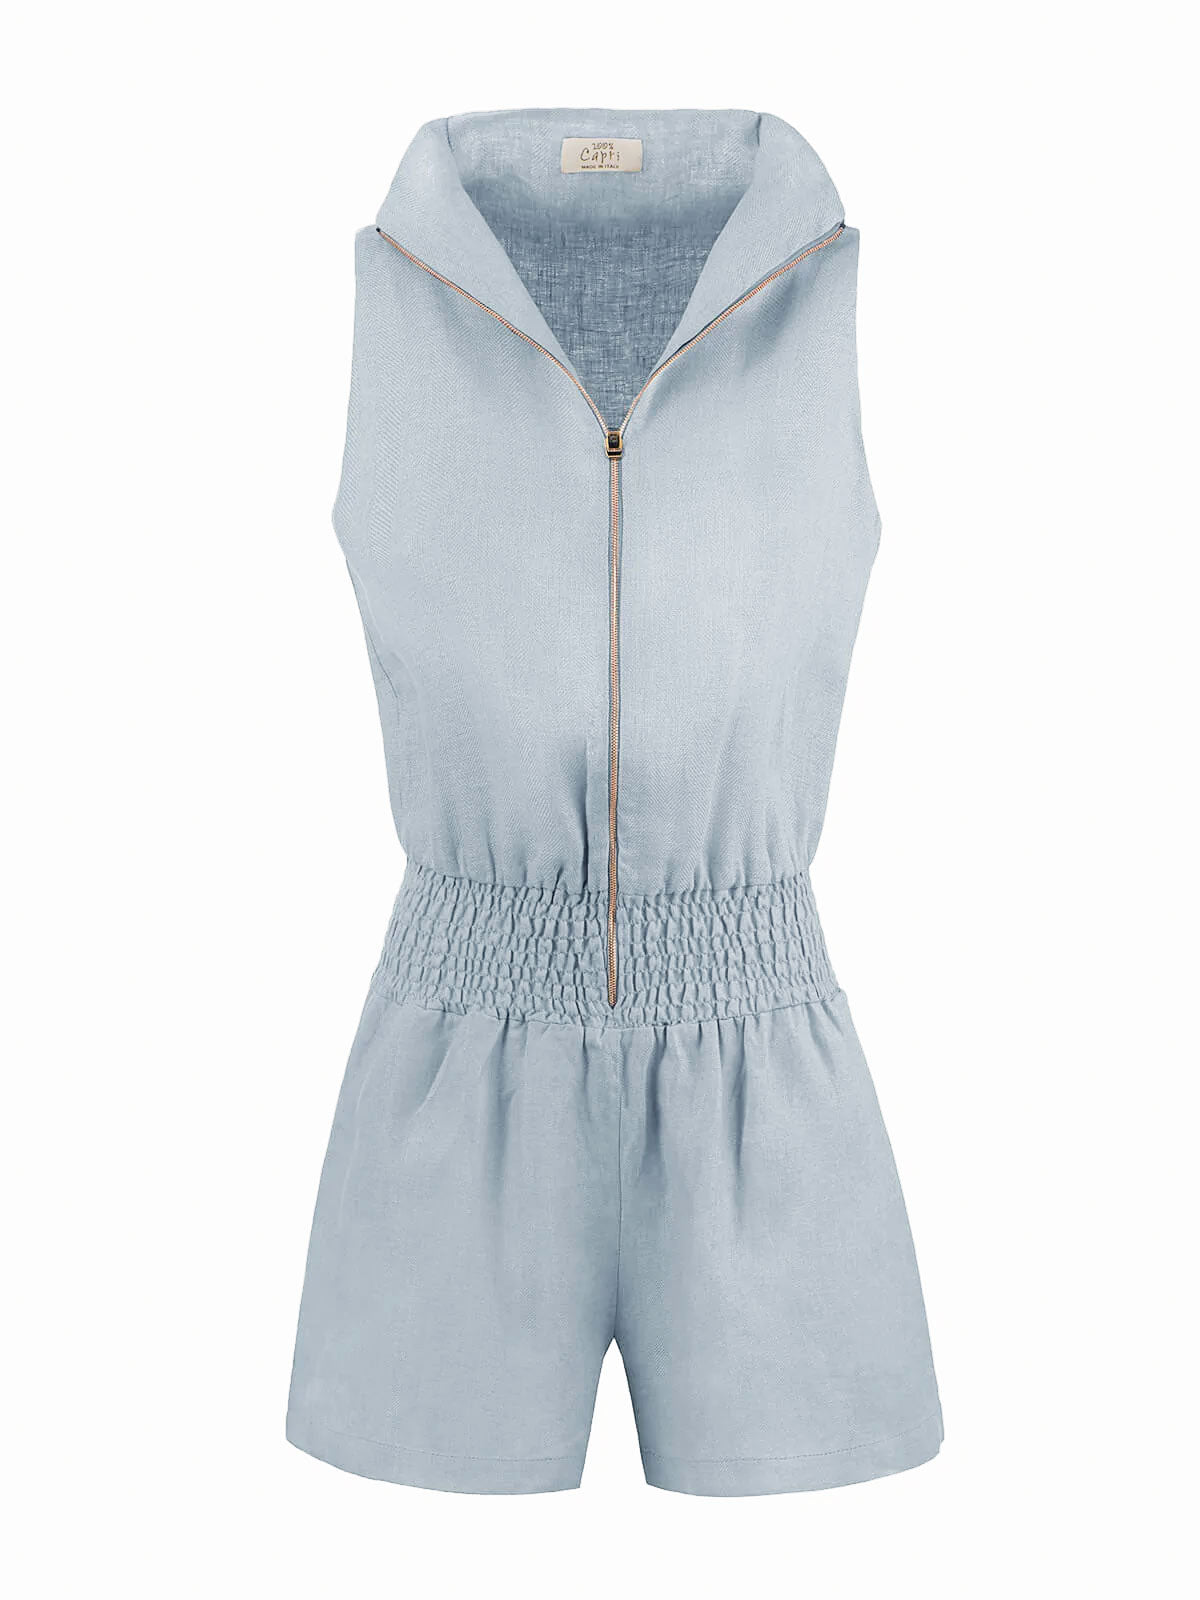 Tuta Zip for woman  100% Capri aquamarine linen jumpsuit front